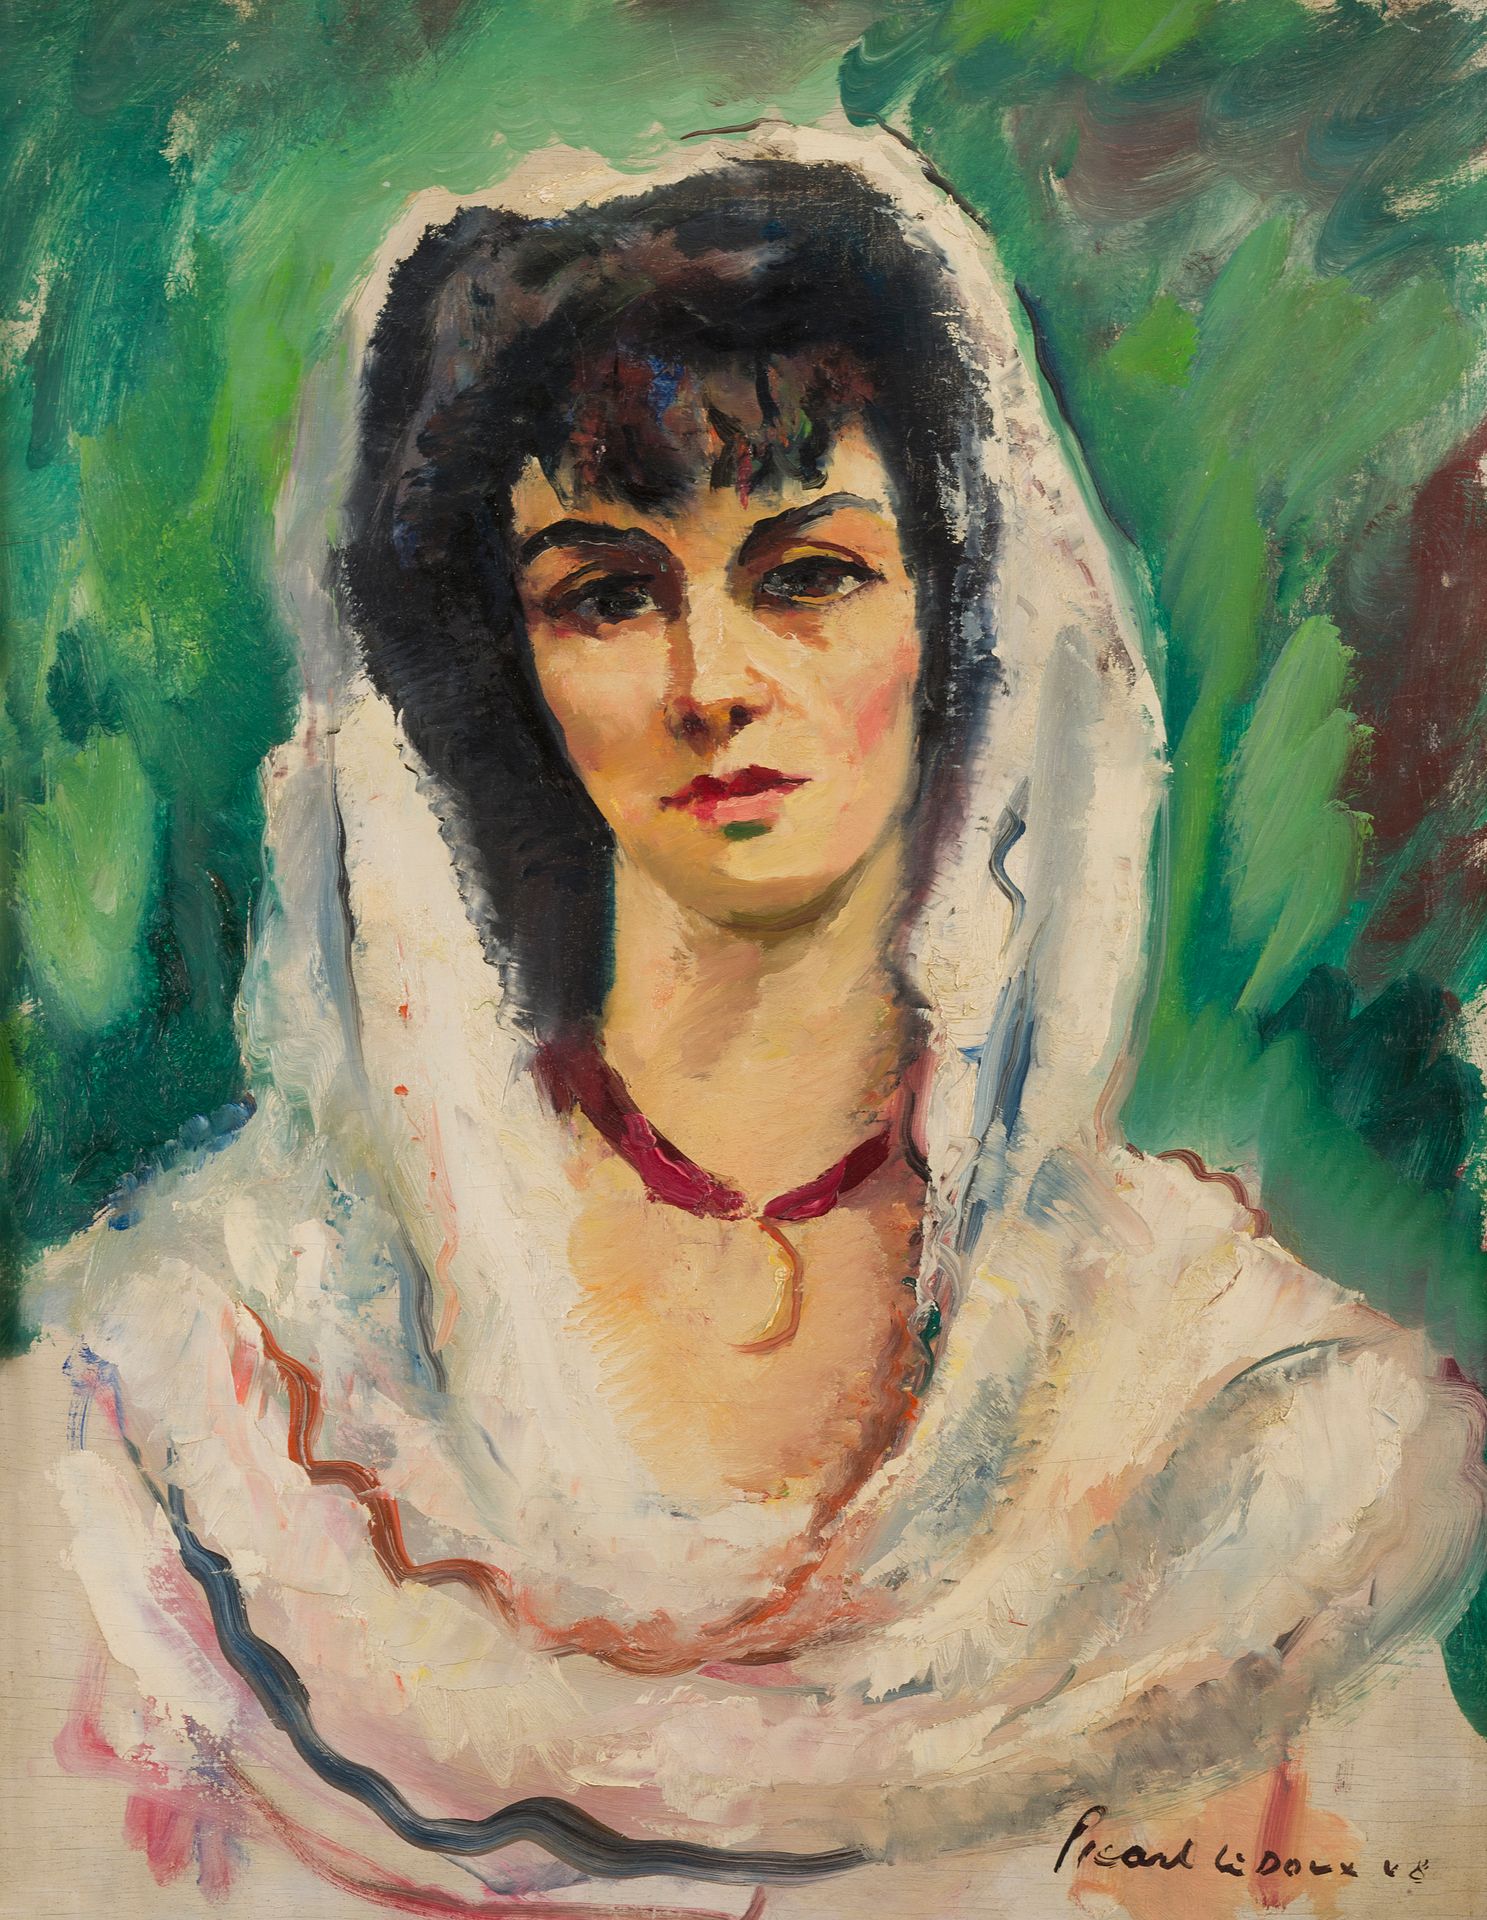 Null 查尔斯-皮卡特-勒杜 (1881-1959)
披着白披肩的肖像，1948年
板面油画，右下角有签名
65 x 50厘米